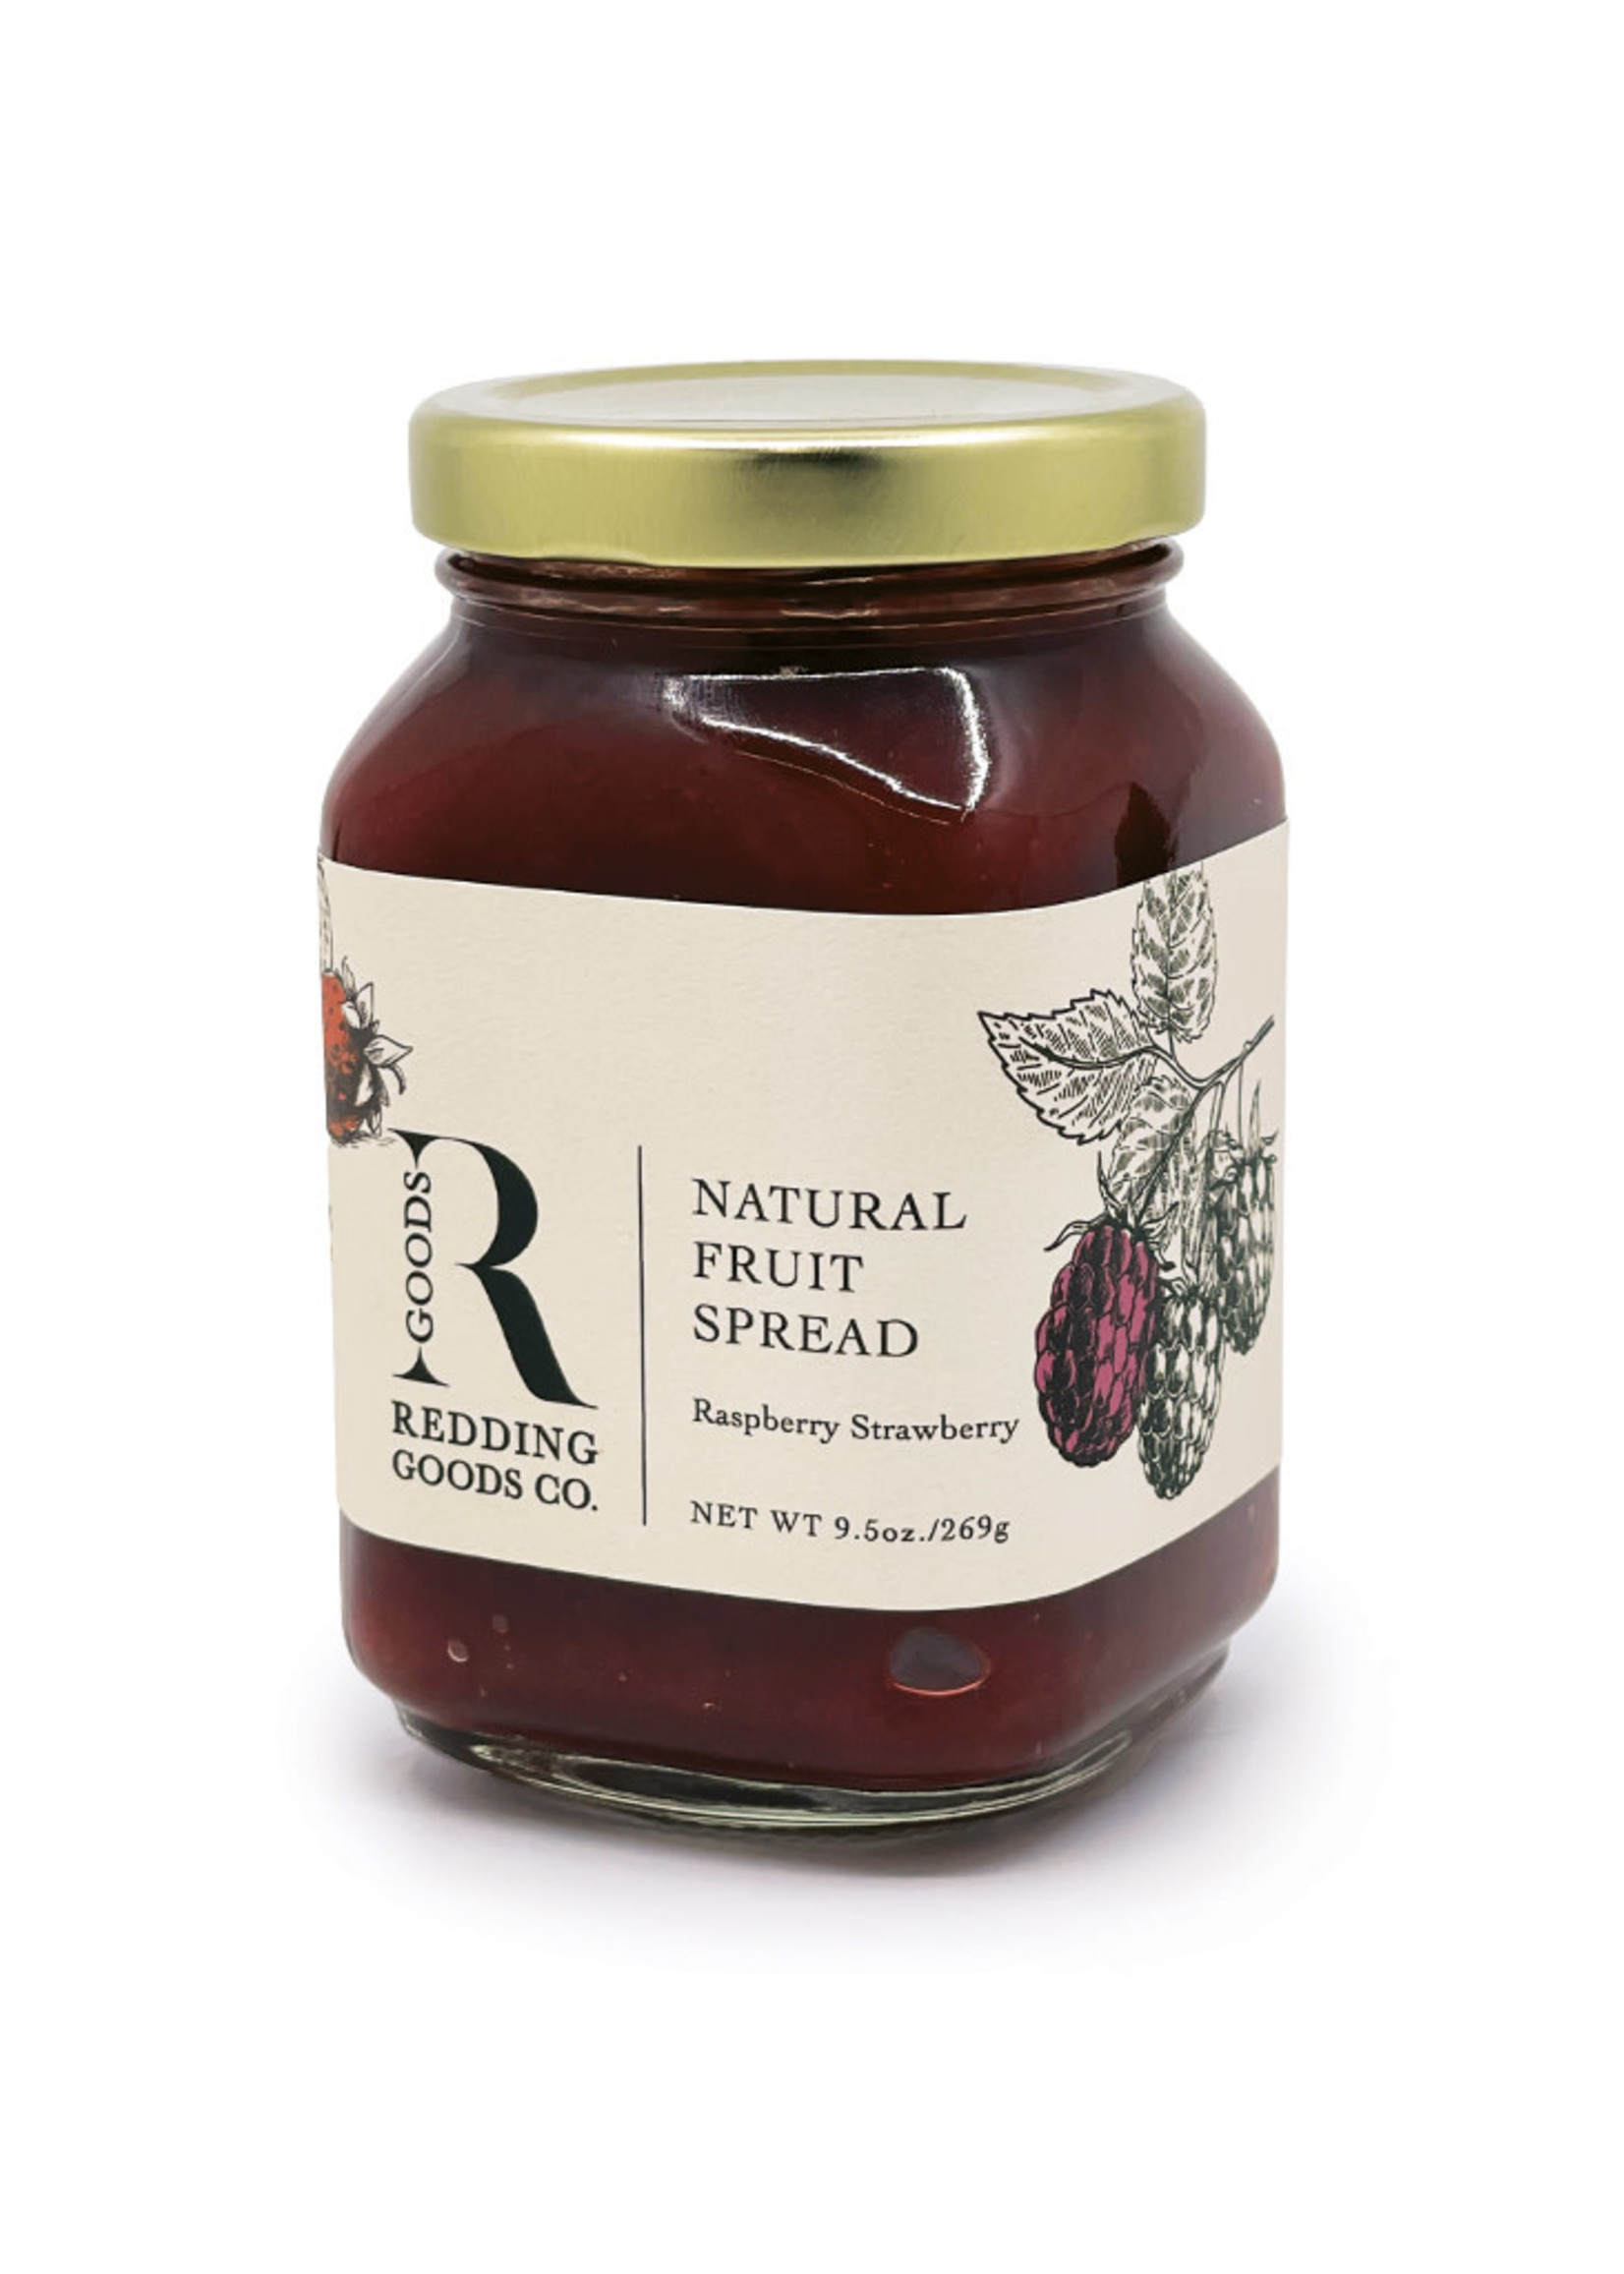 Redding Goods Co. Redding Goods Co. Natural Fruit Spread Raspberry Strawberry 9.5oz